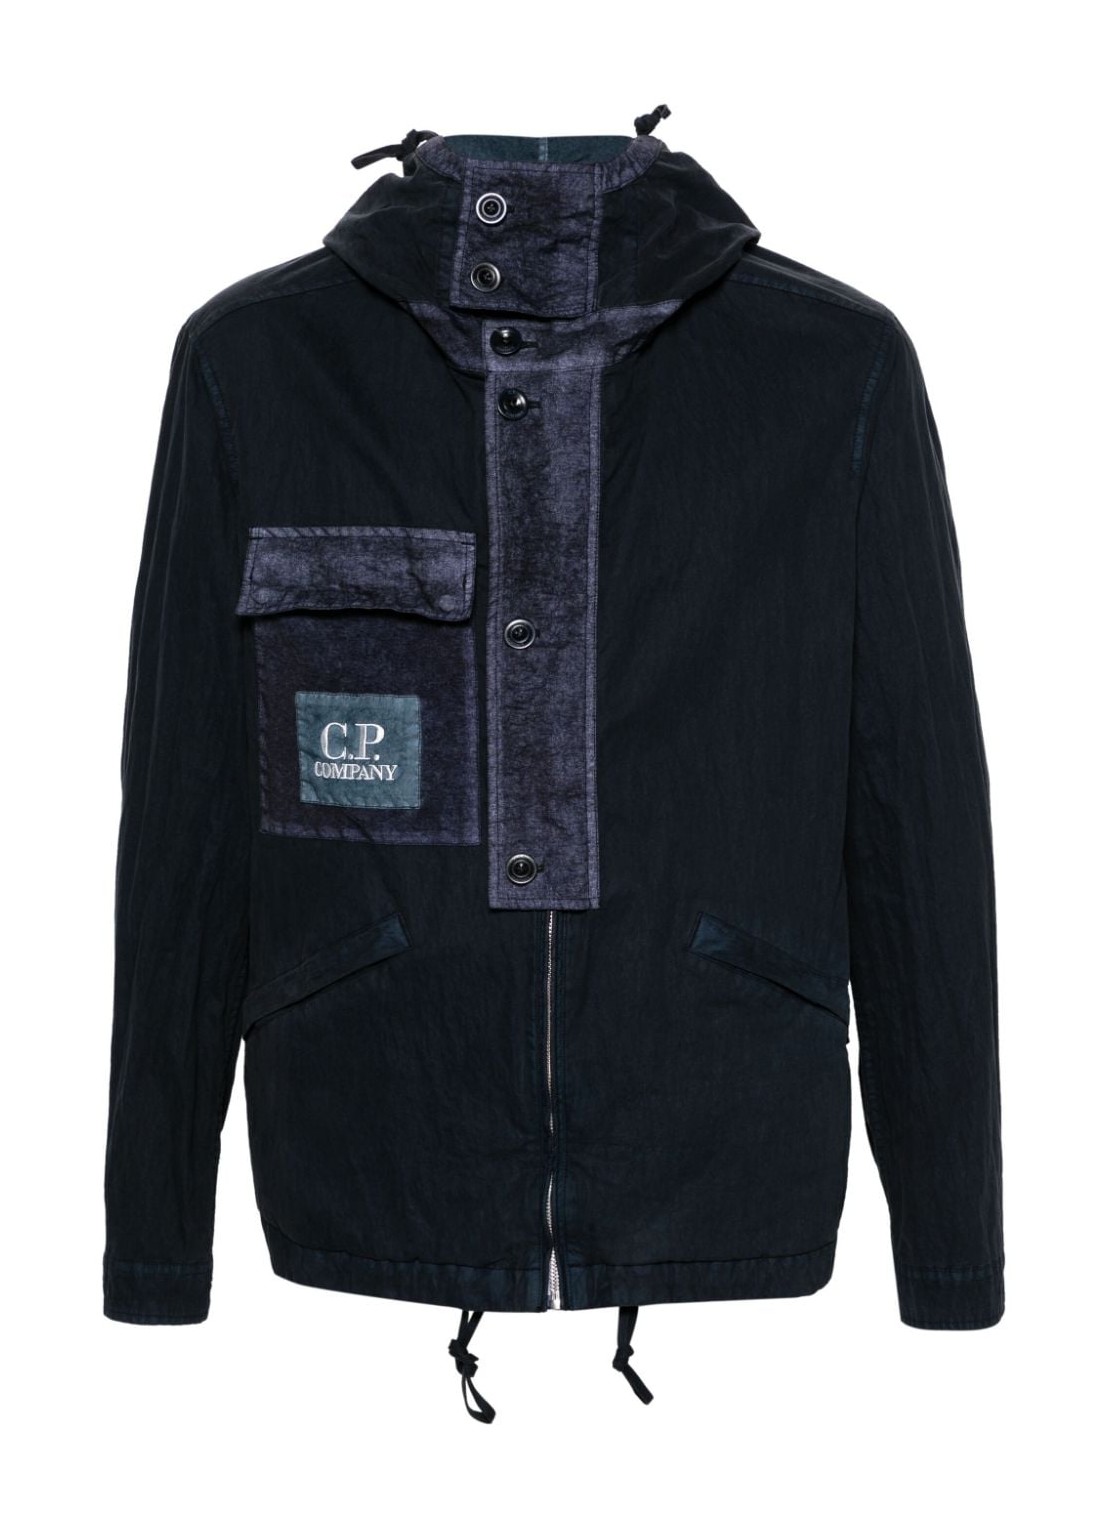 Outerwear c.p.company outerwear man50 fili gum hooded jacket - 16cmow133a006233g 886 talla 50
 